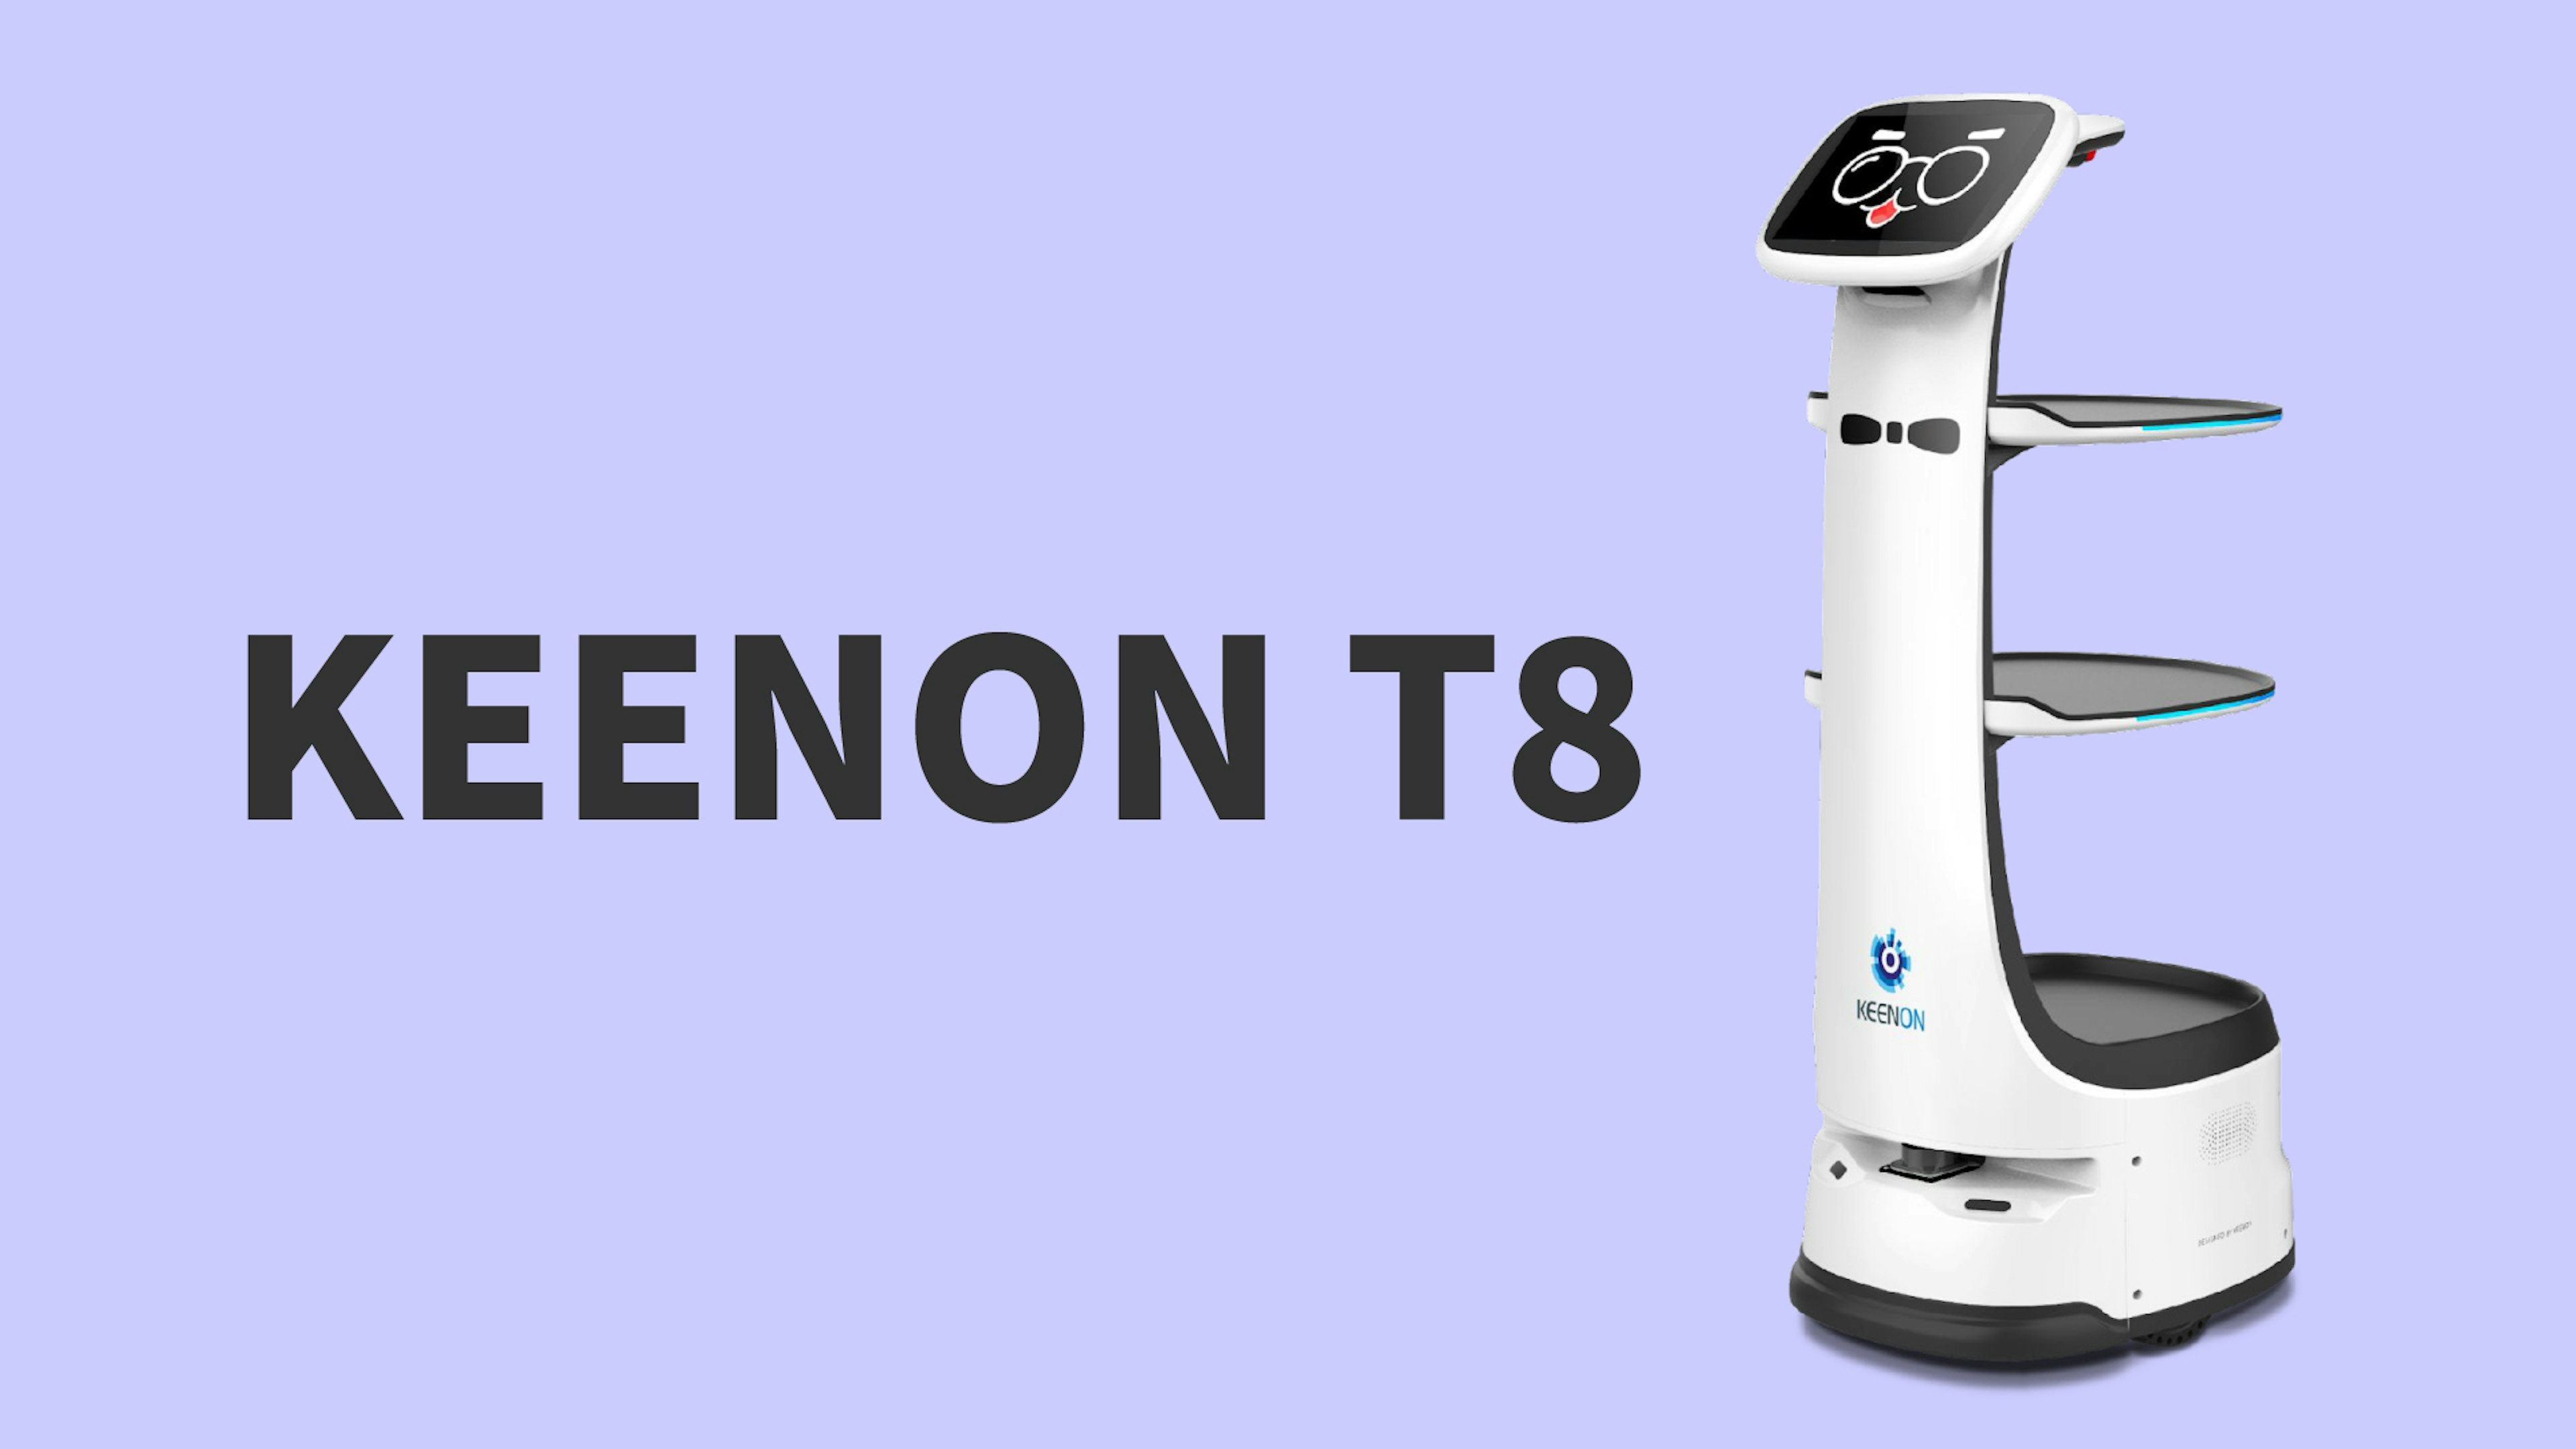 55cmの道幅も安全・正確に走行
配膳・運搬ロボット「KEENON T8」